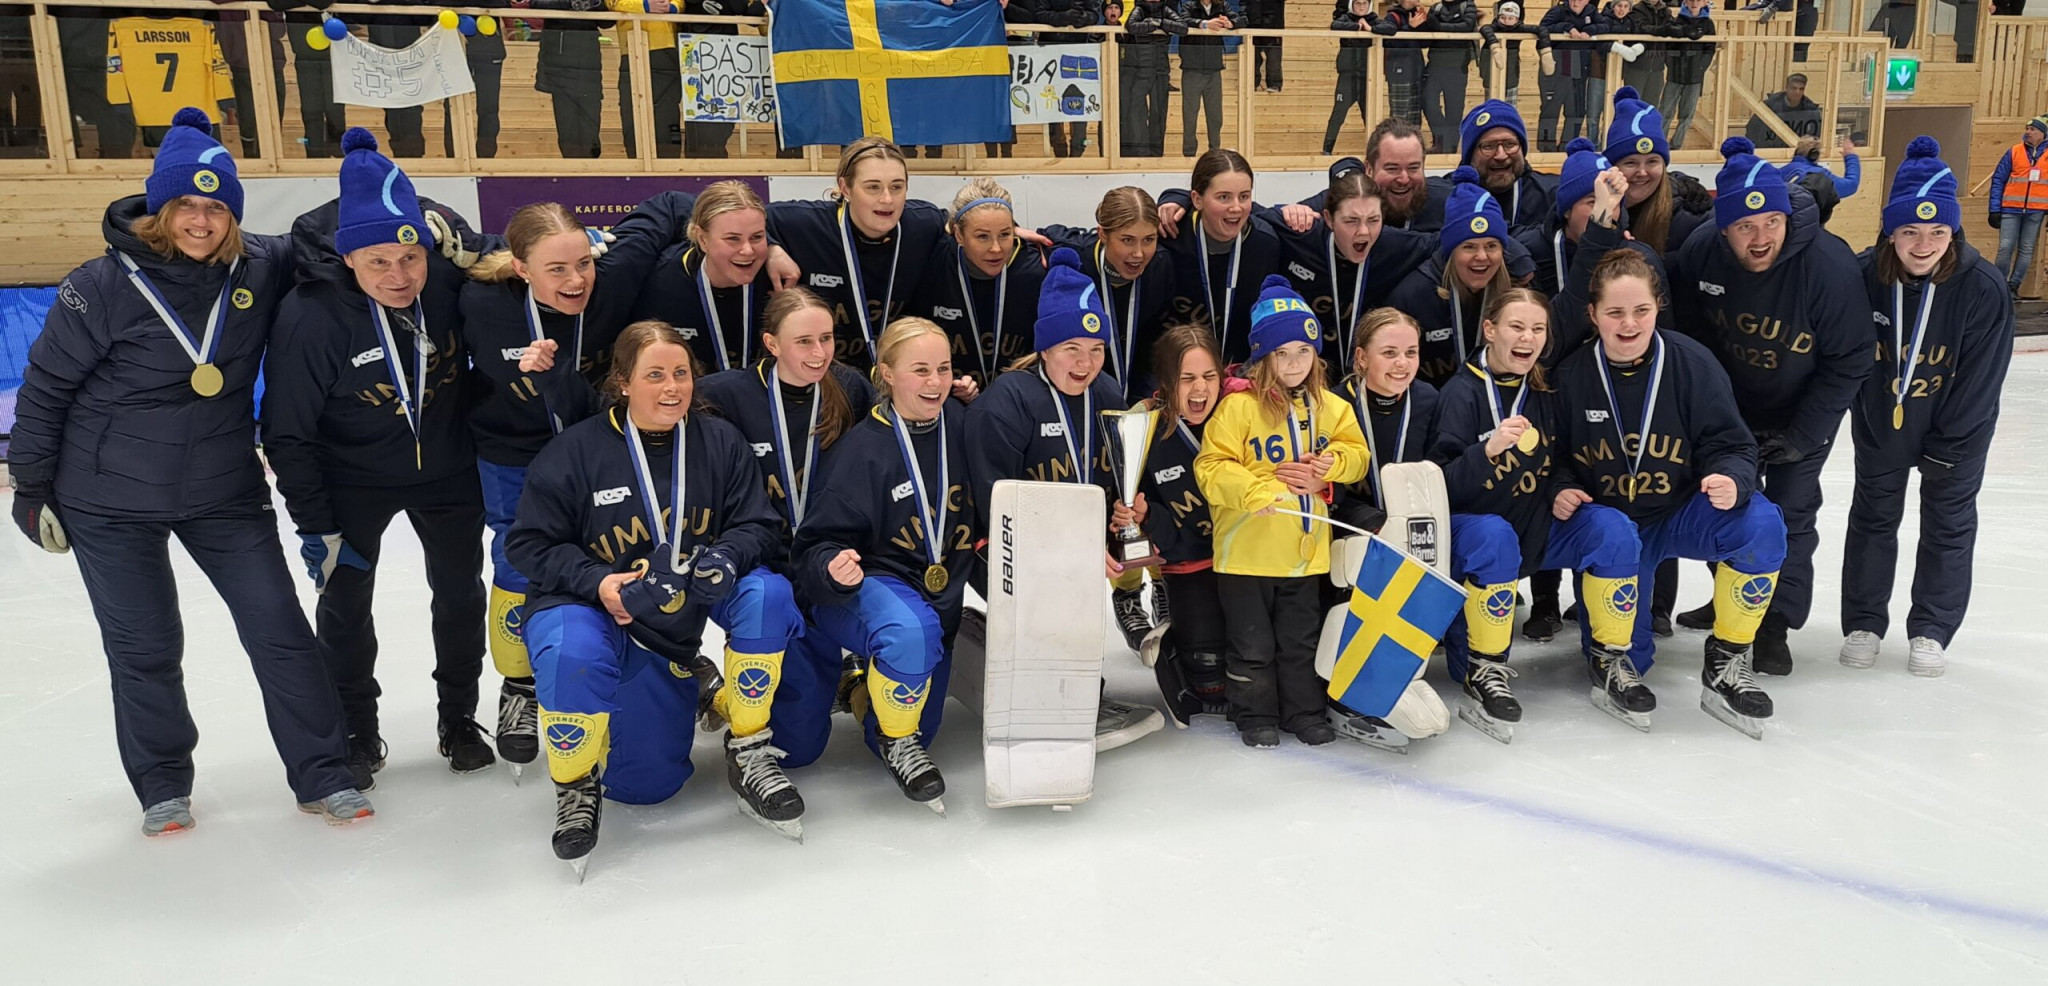 Hosts Sweden enjoy double success at Bandy World Championships